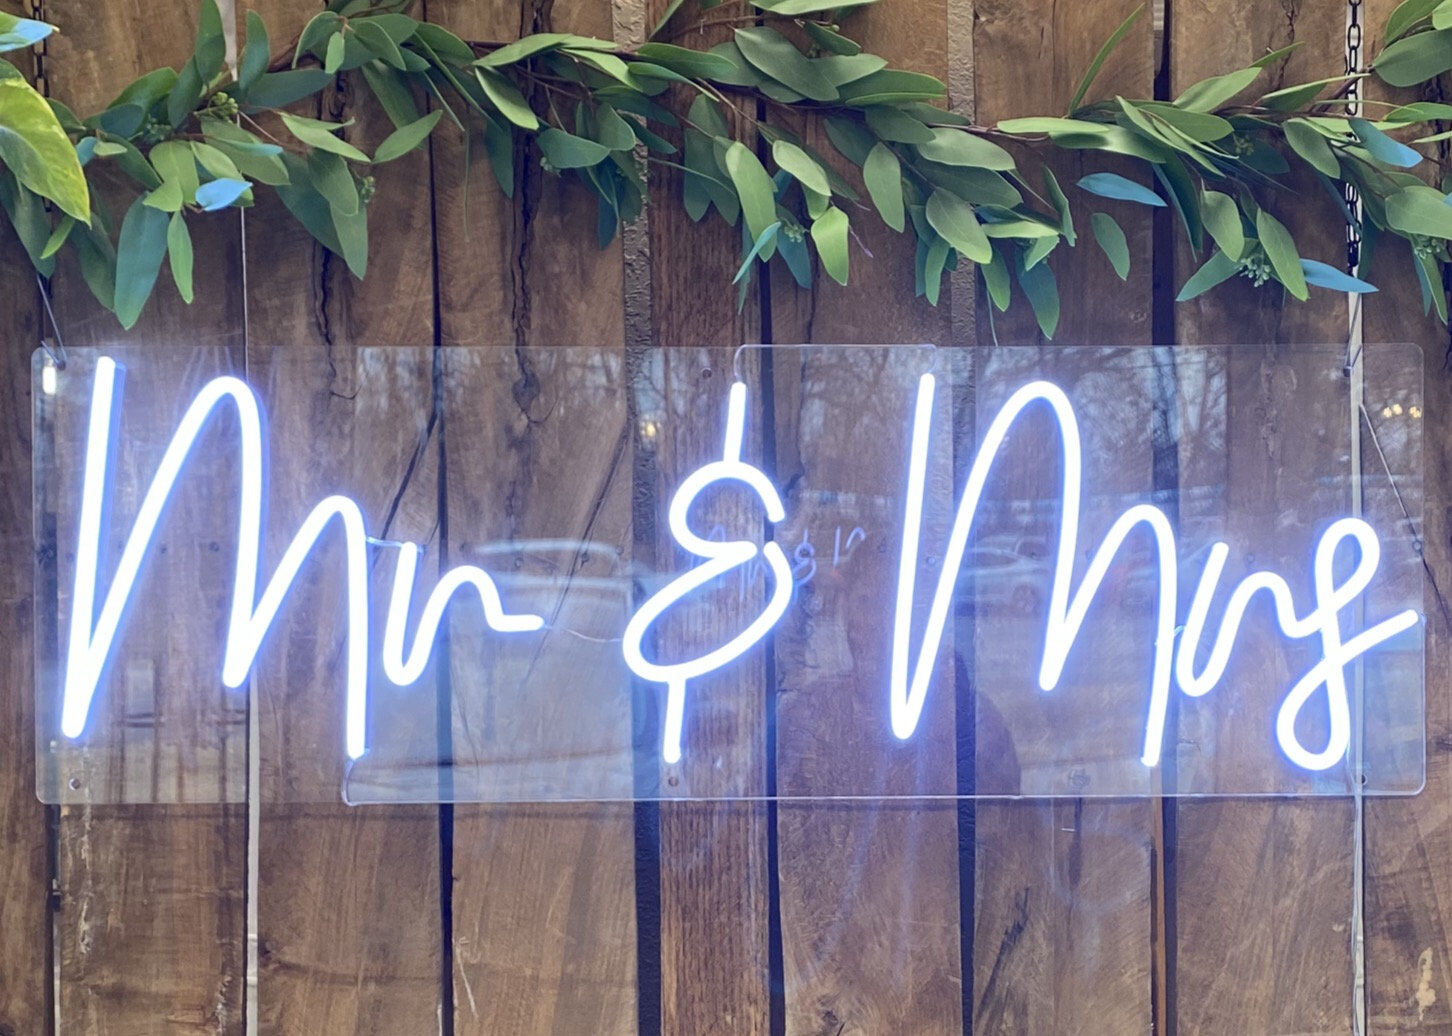 Mr&Mrs Neon Sign